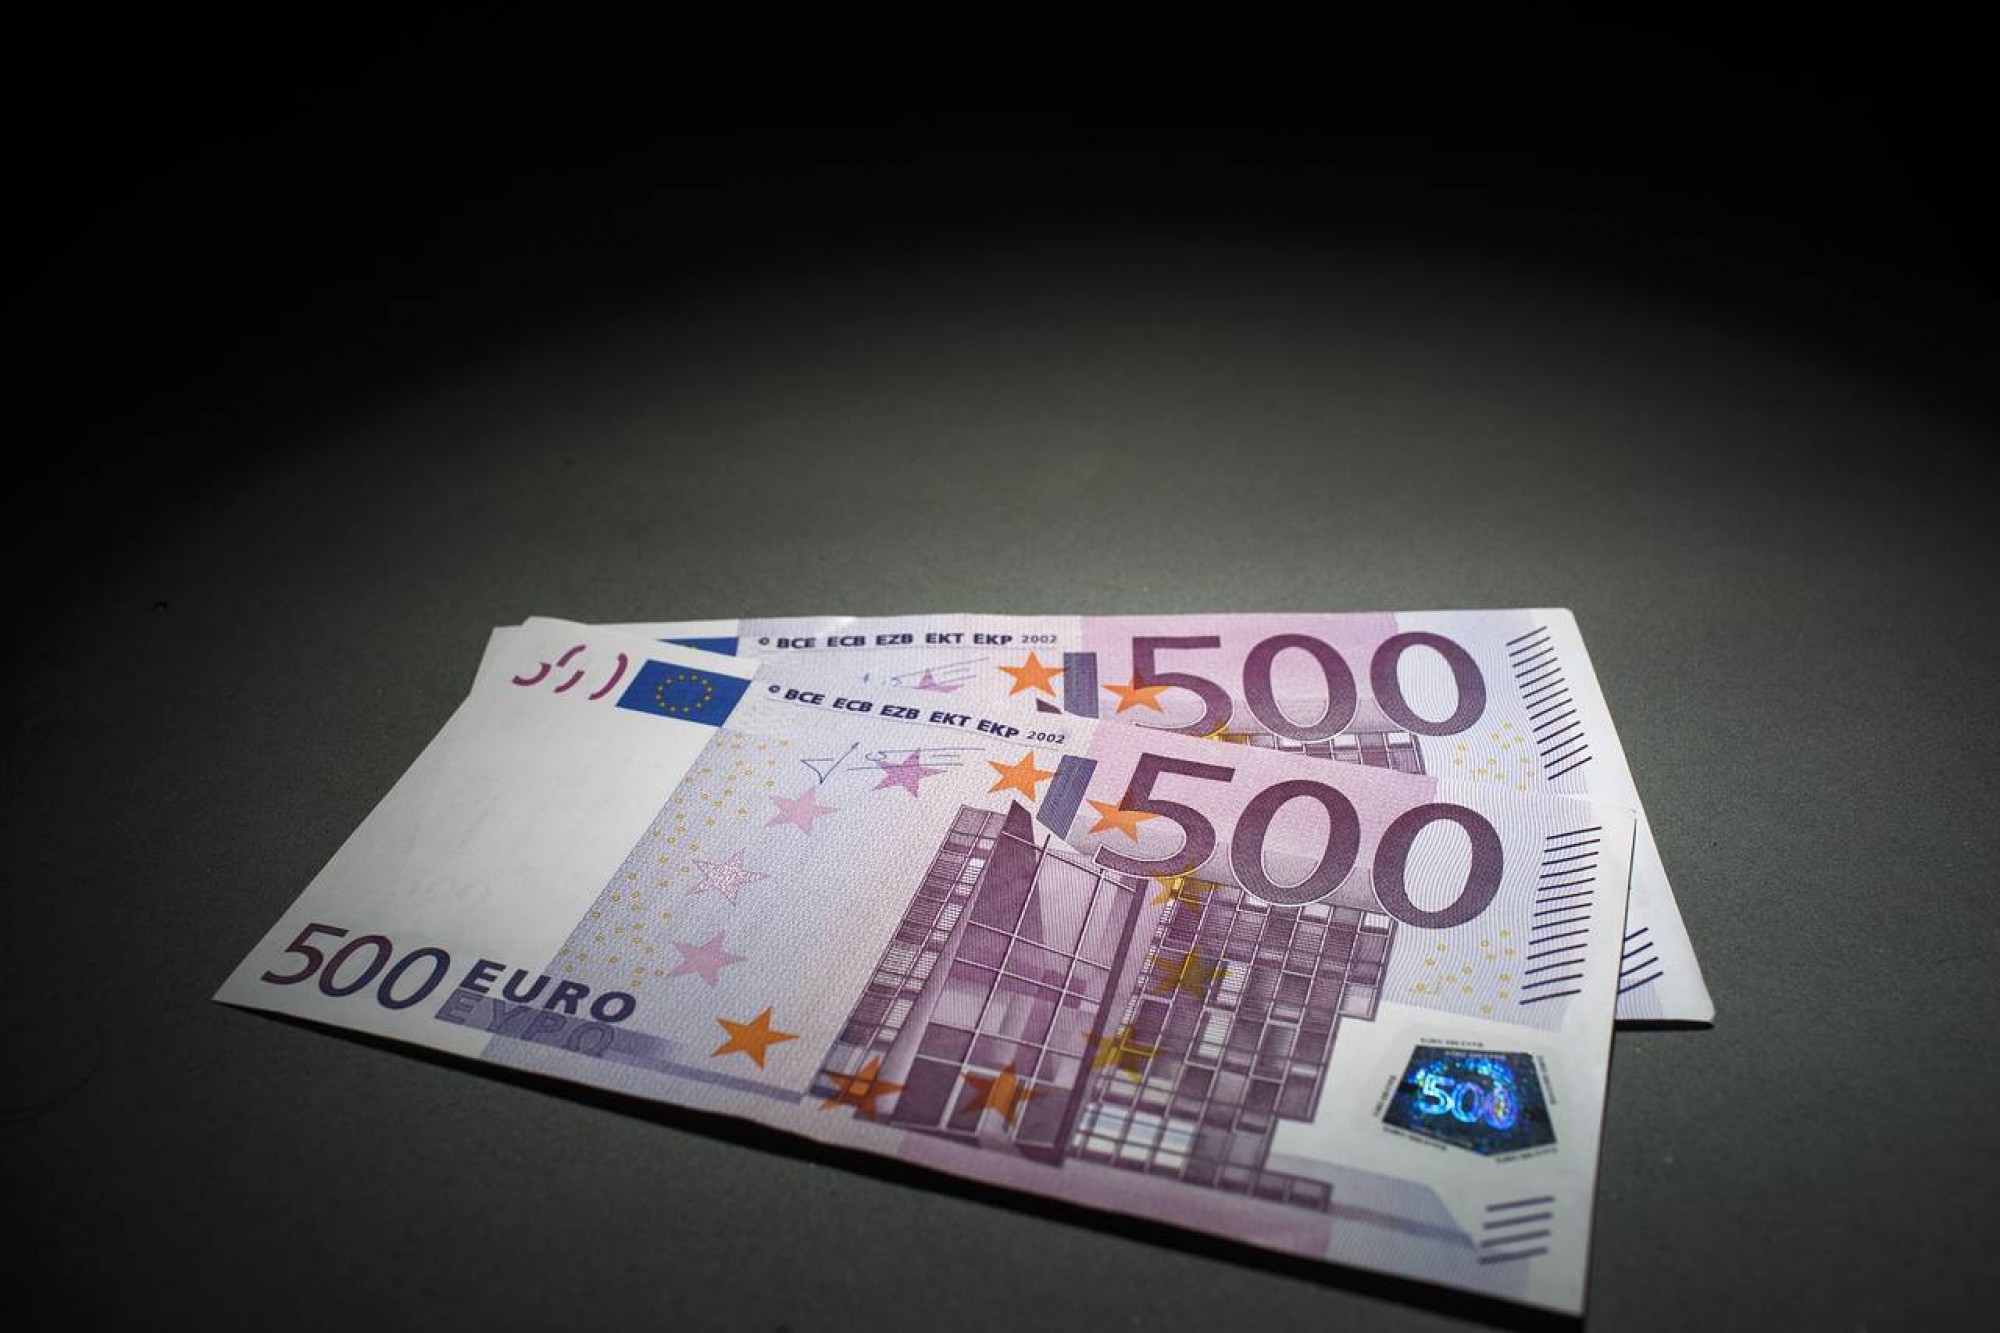 Тысяча евро в долларах. Купюра 500 евро. Банкноты евро 500. Фотография 500 евро. Евро 500,1000.